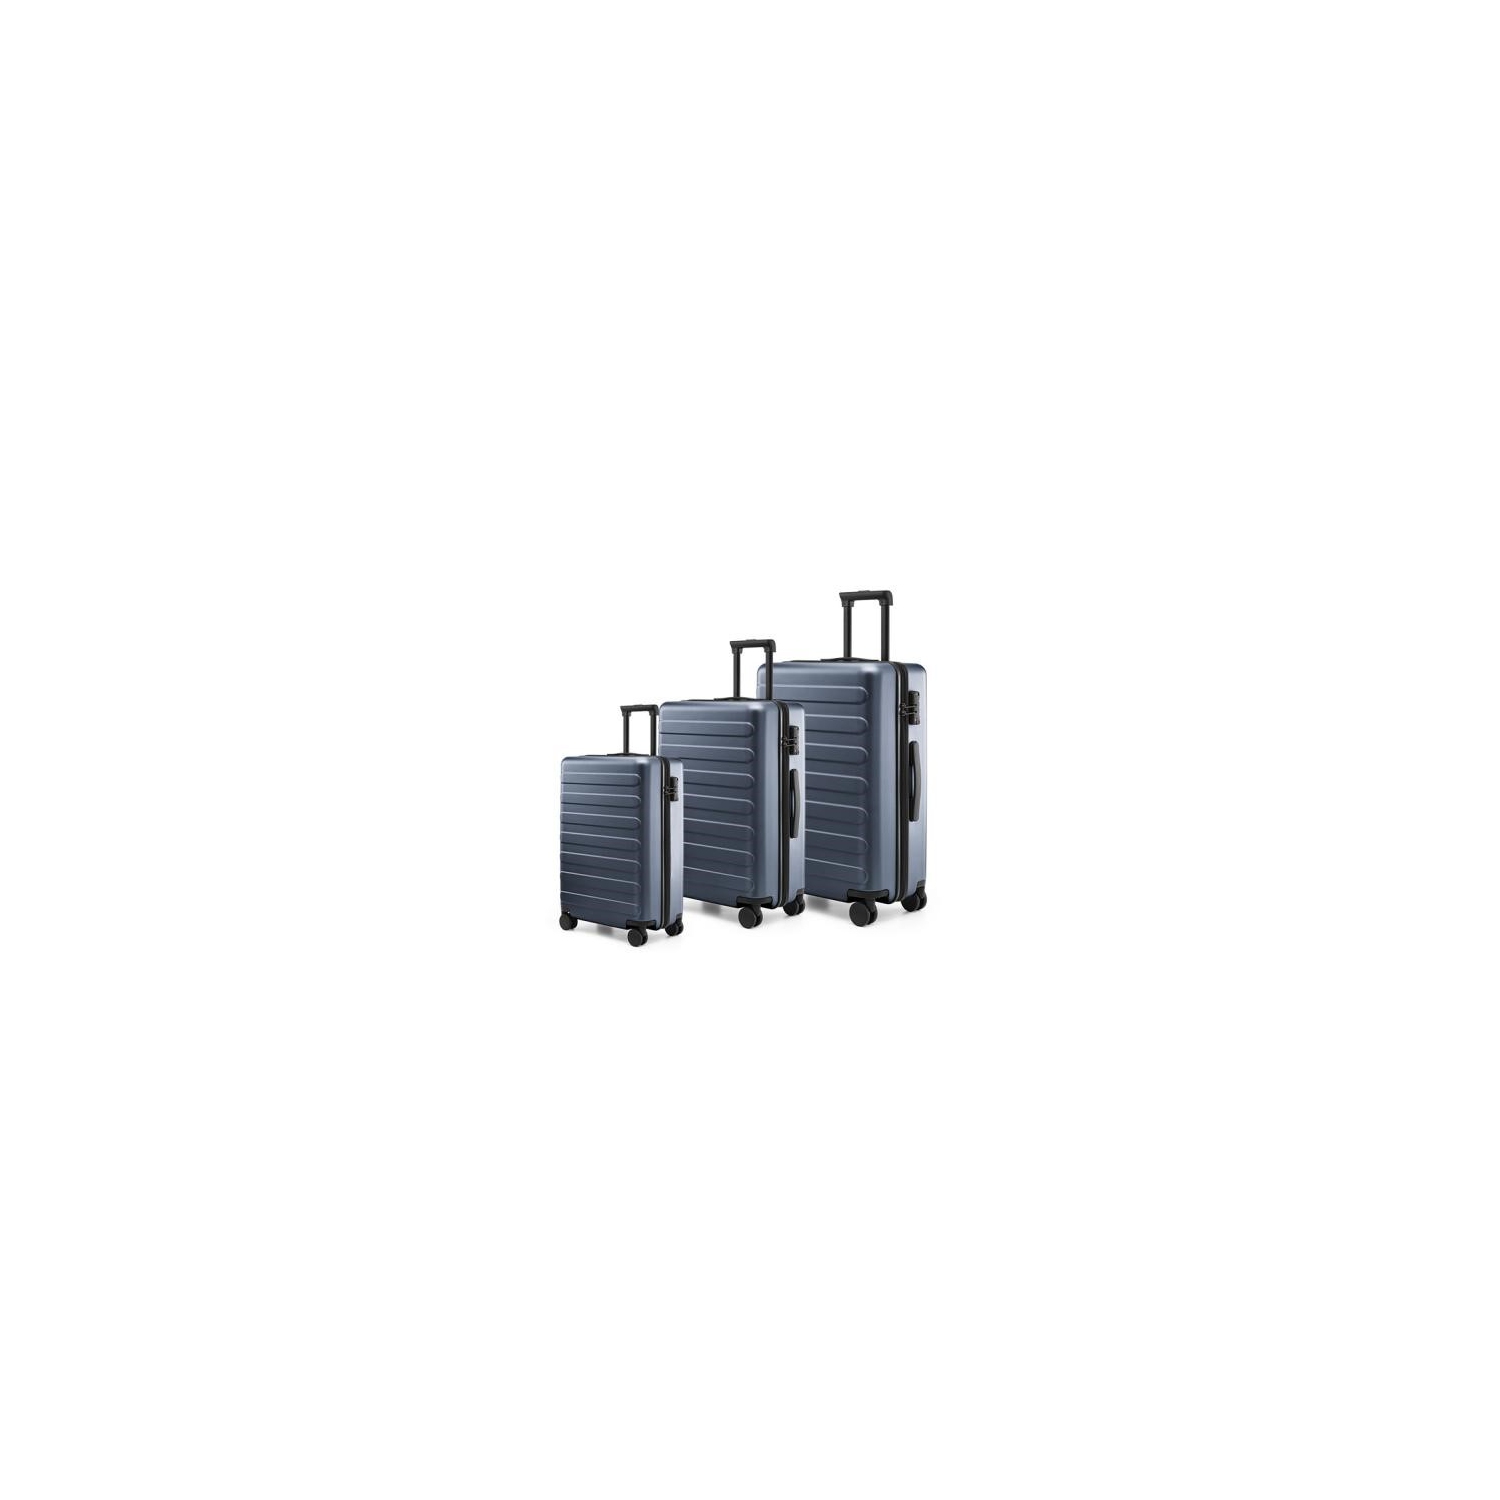 Ninetygo Rhine 3pc Lightweight Luggage Set (20/24/28) with Durable Makrolon Polycarbonate Hard-shell and TSA Lock